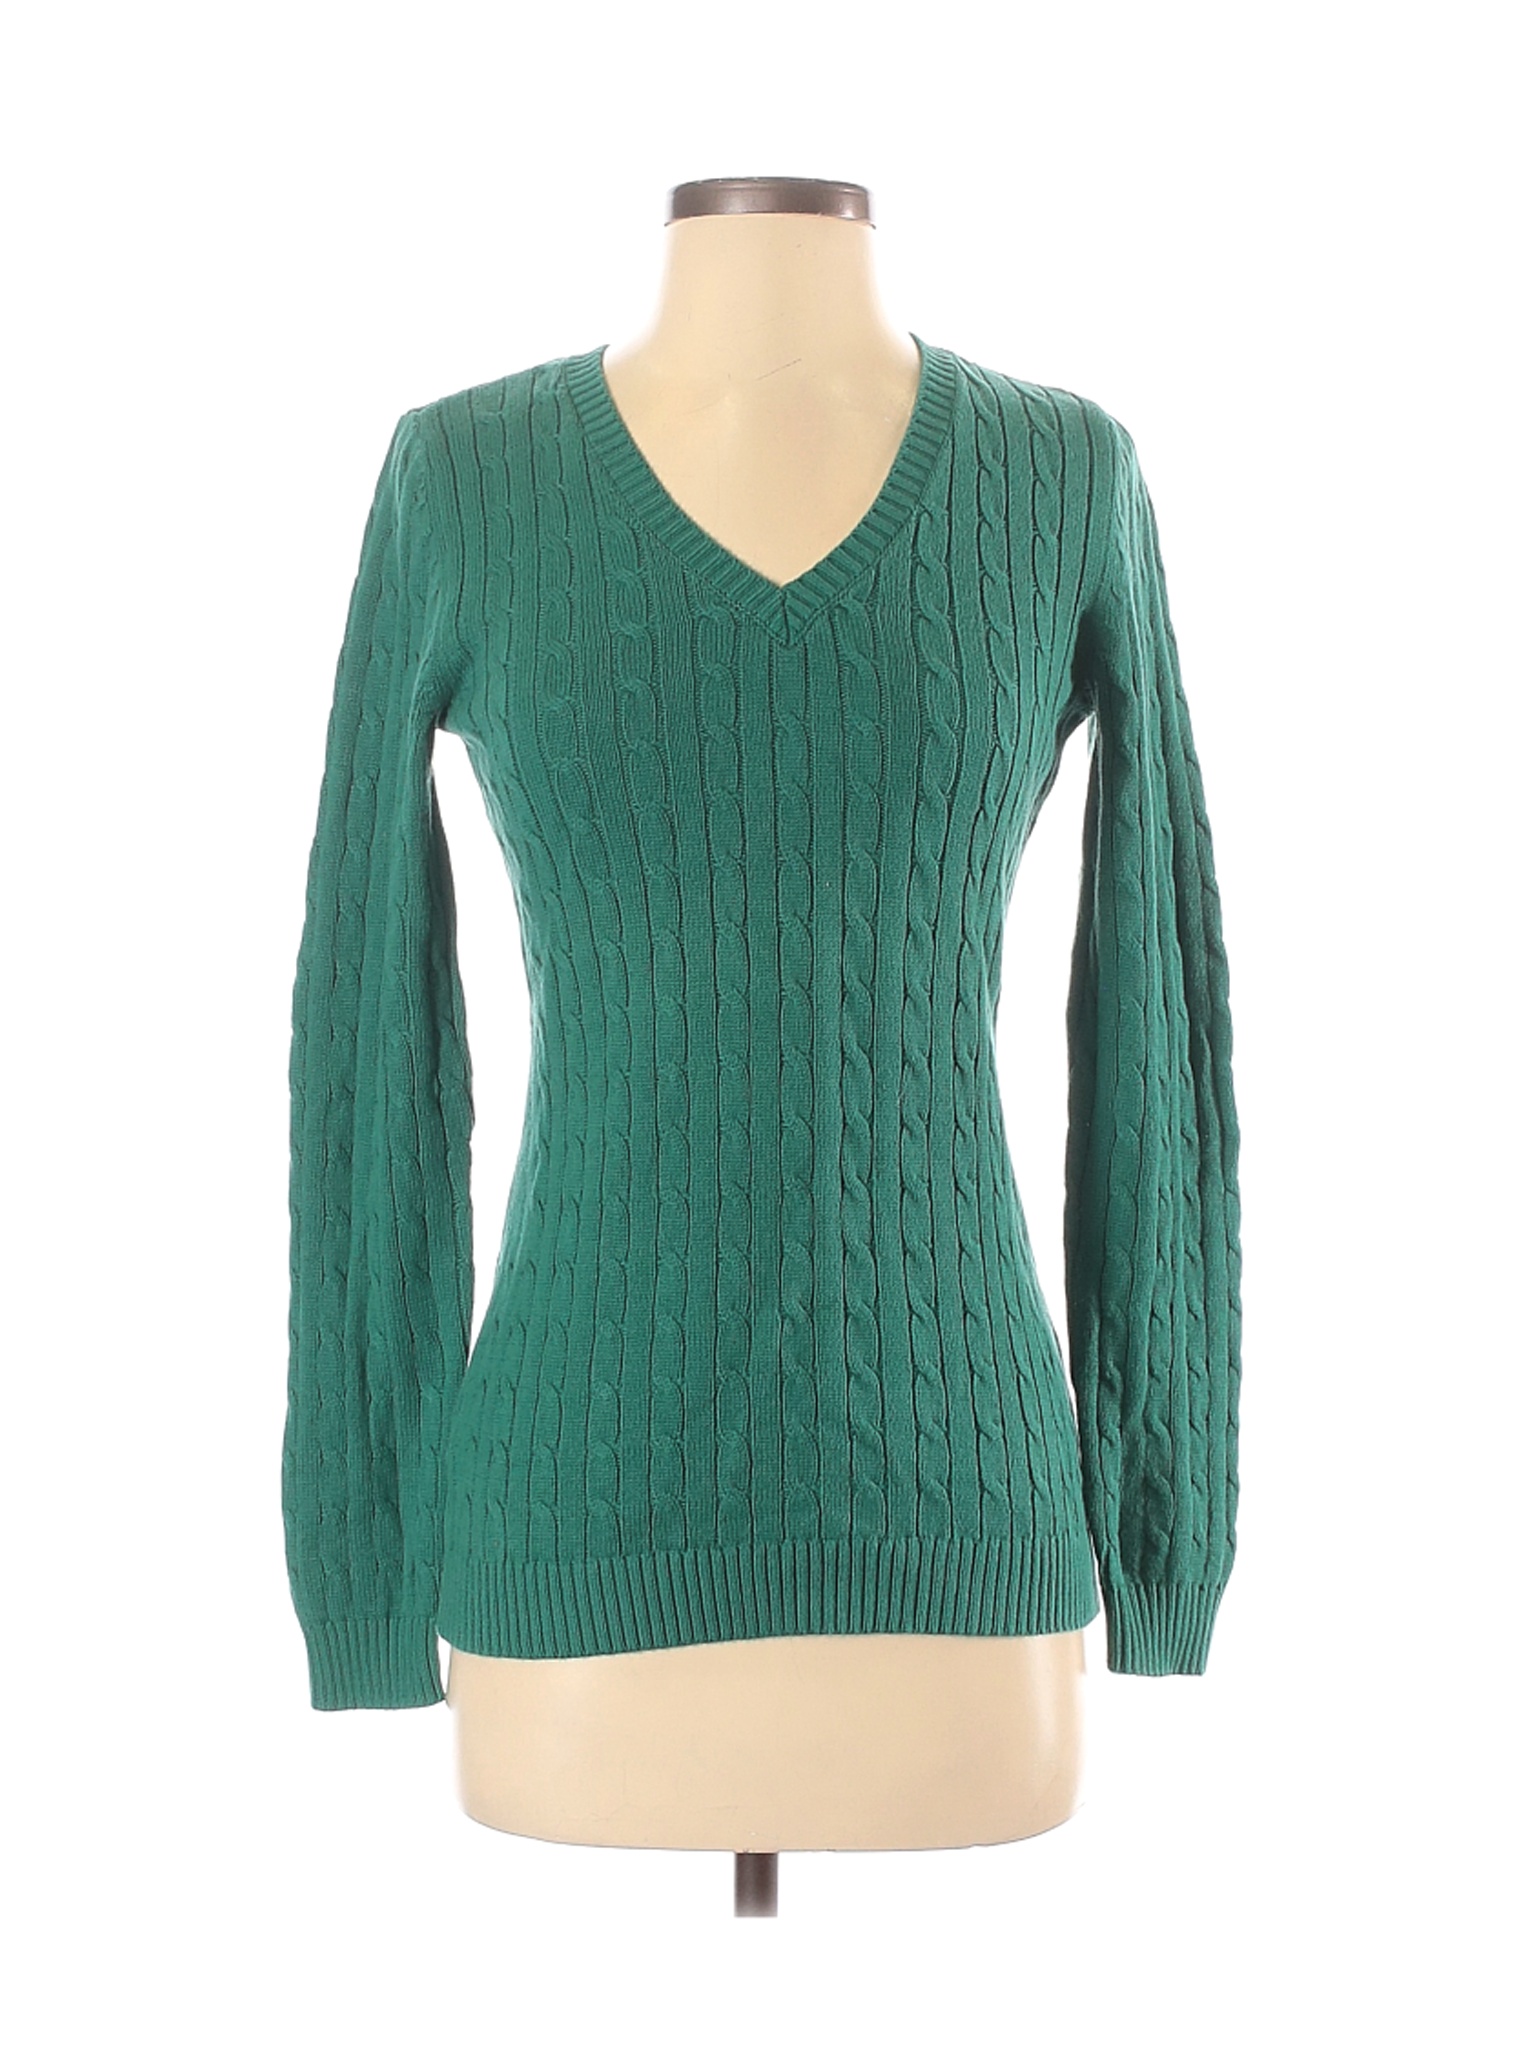 Ann Taylor Factory Women Green Pullover Sweater XS | eBay